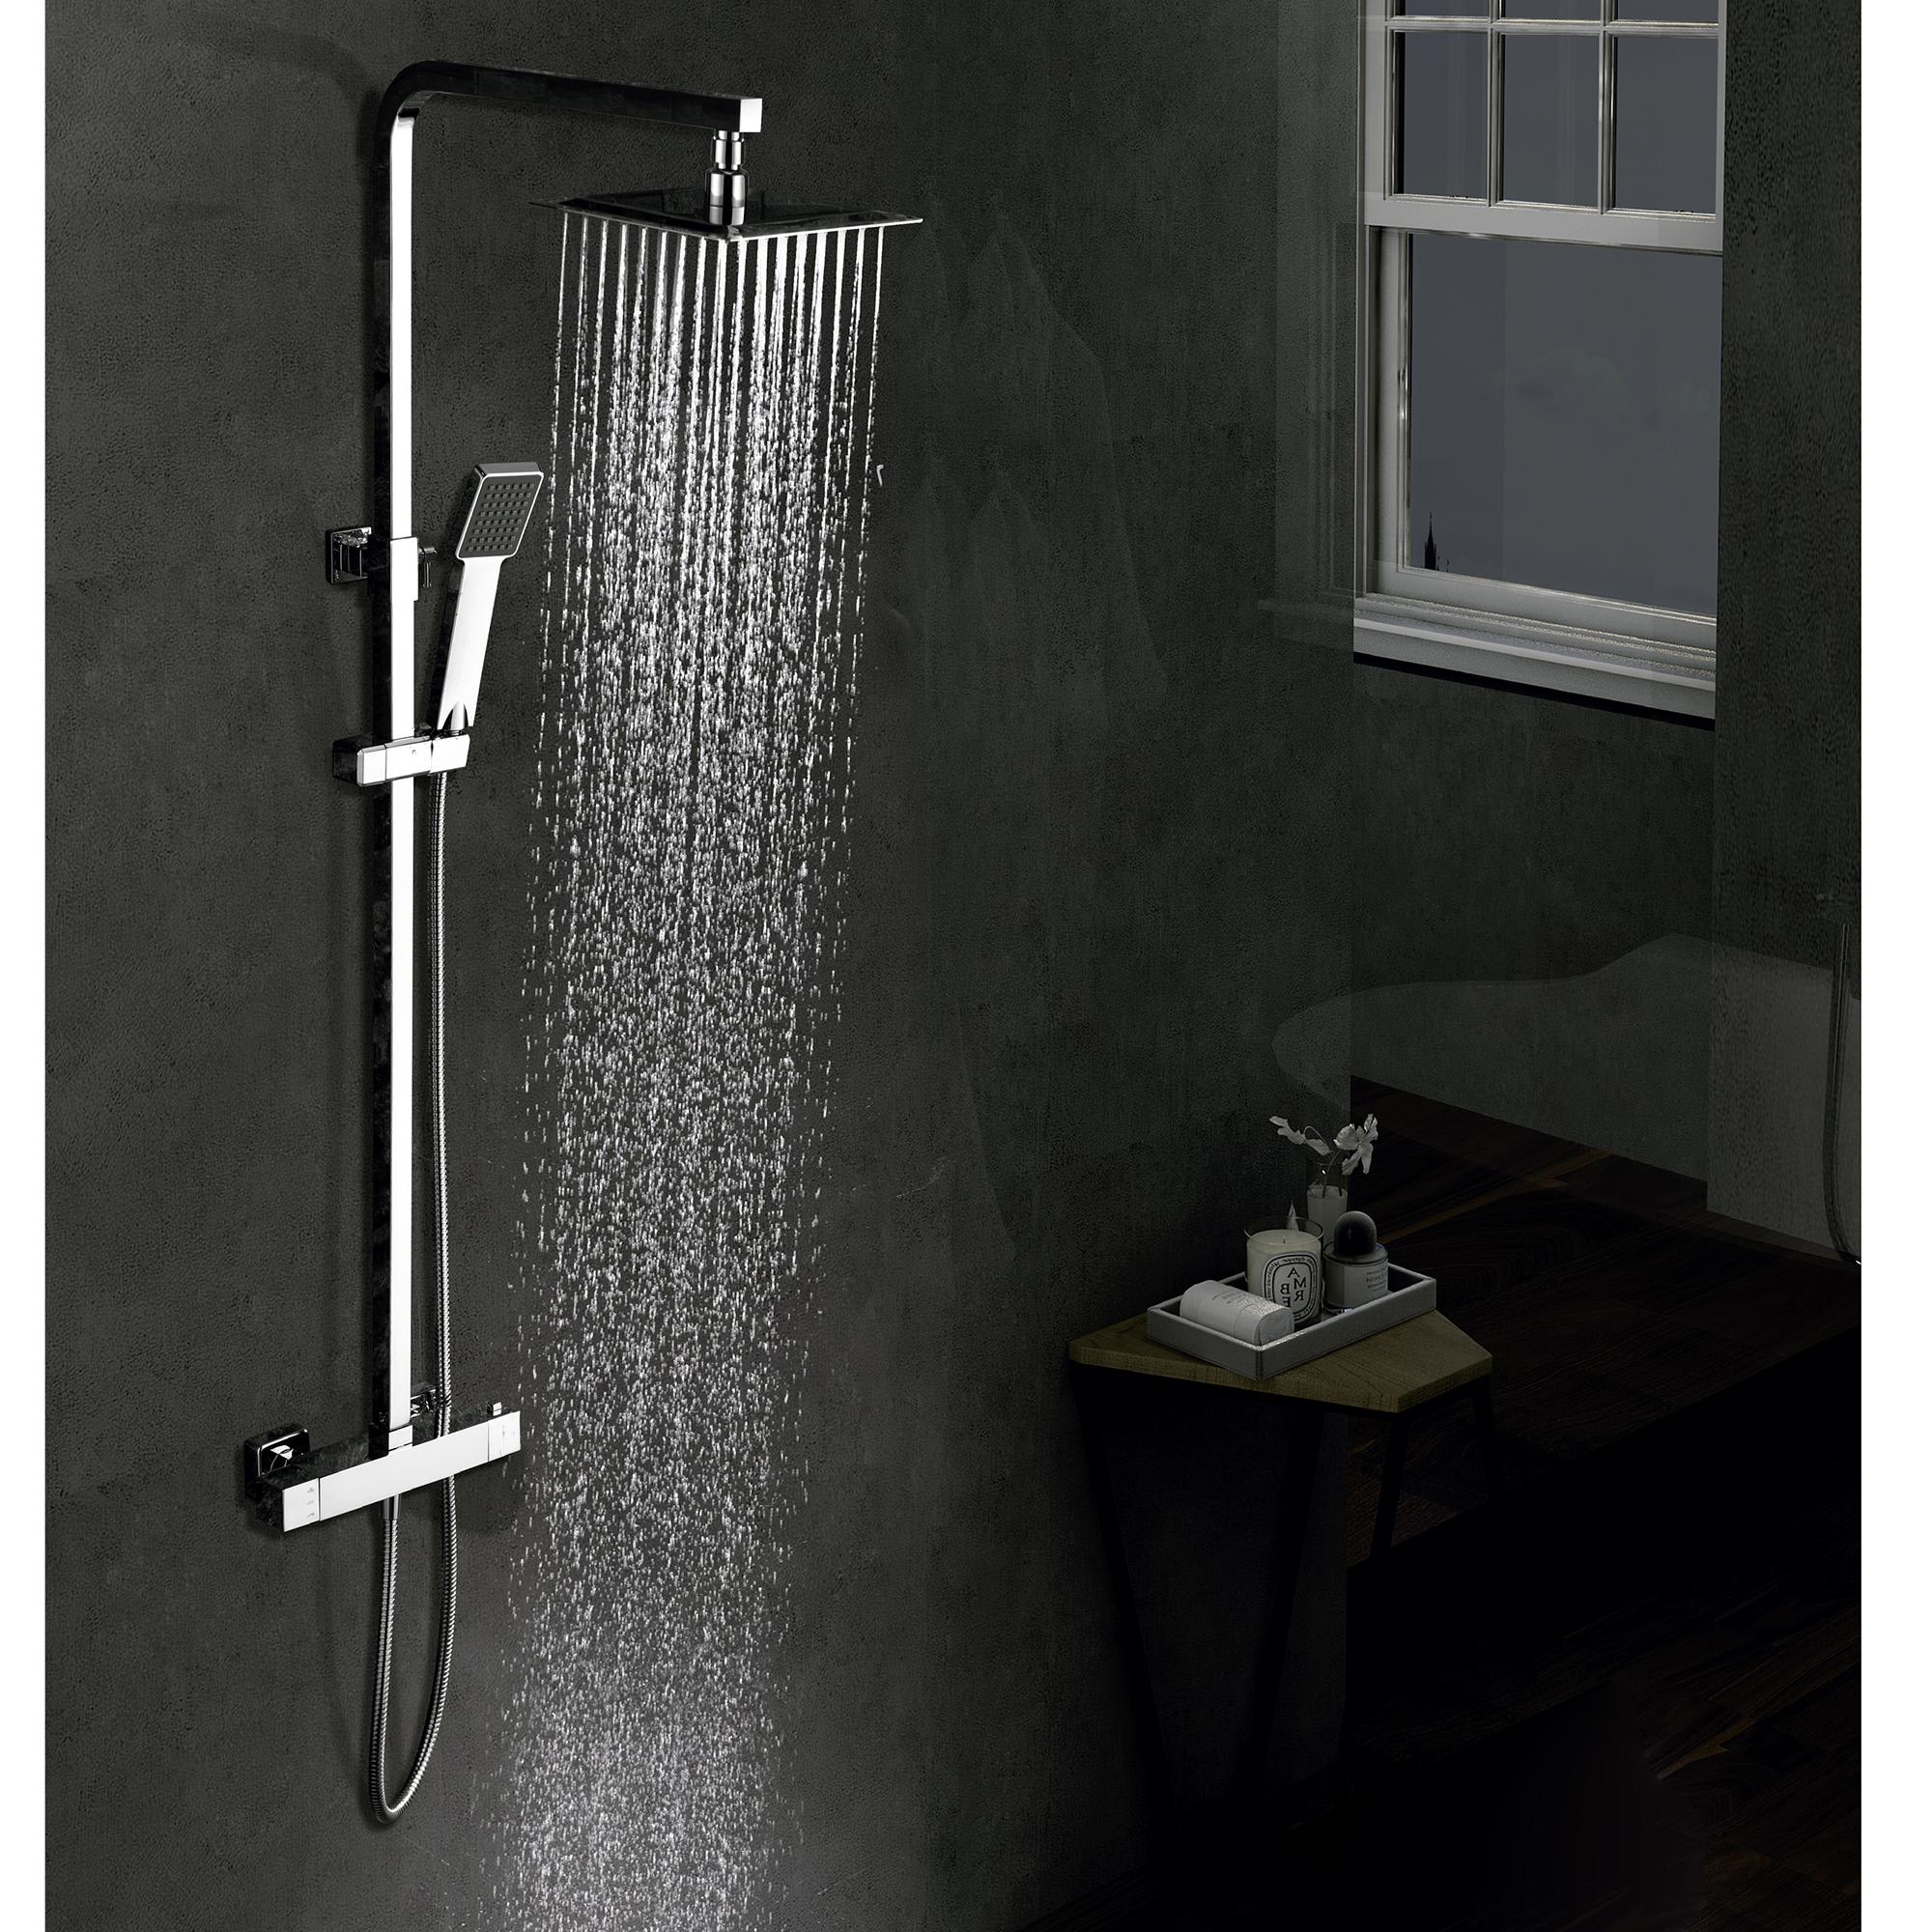 Griferia de ducha Imex Saona - Ideal Mamparas